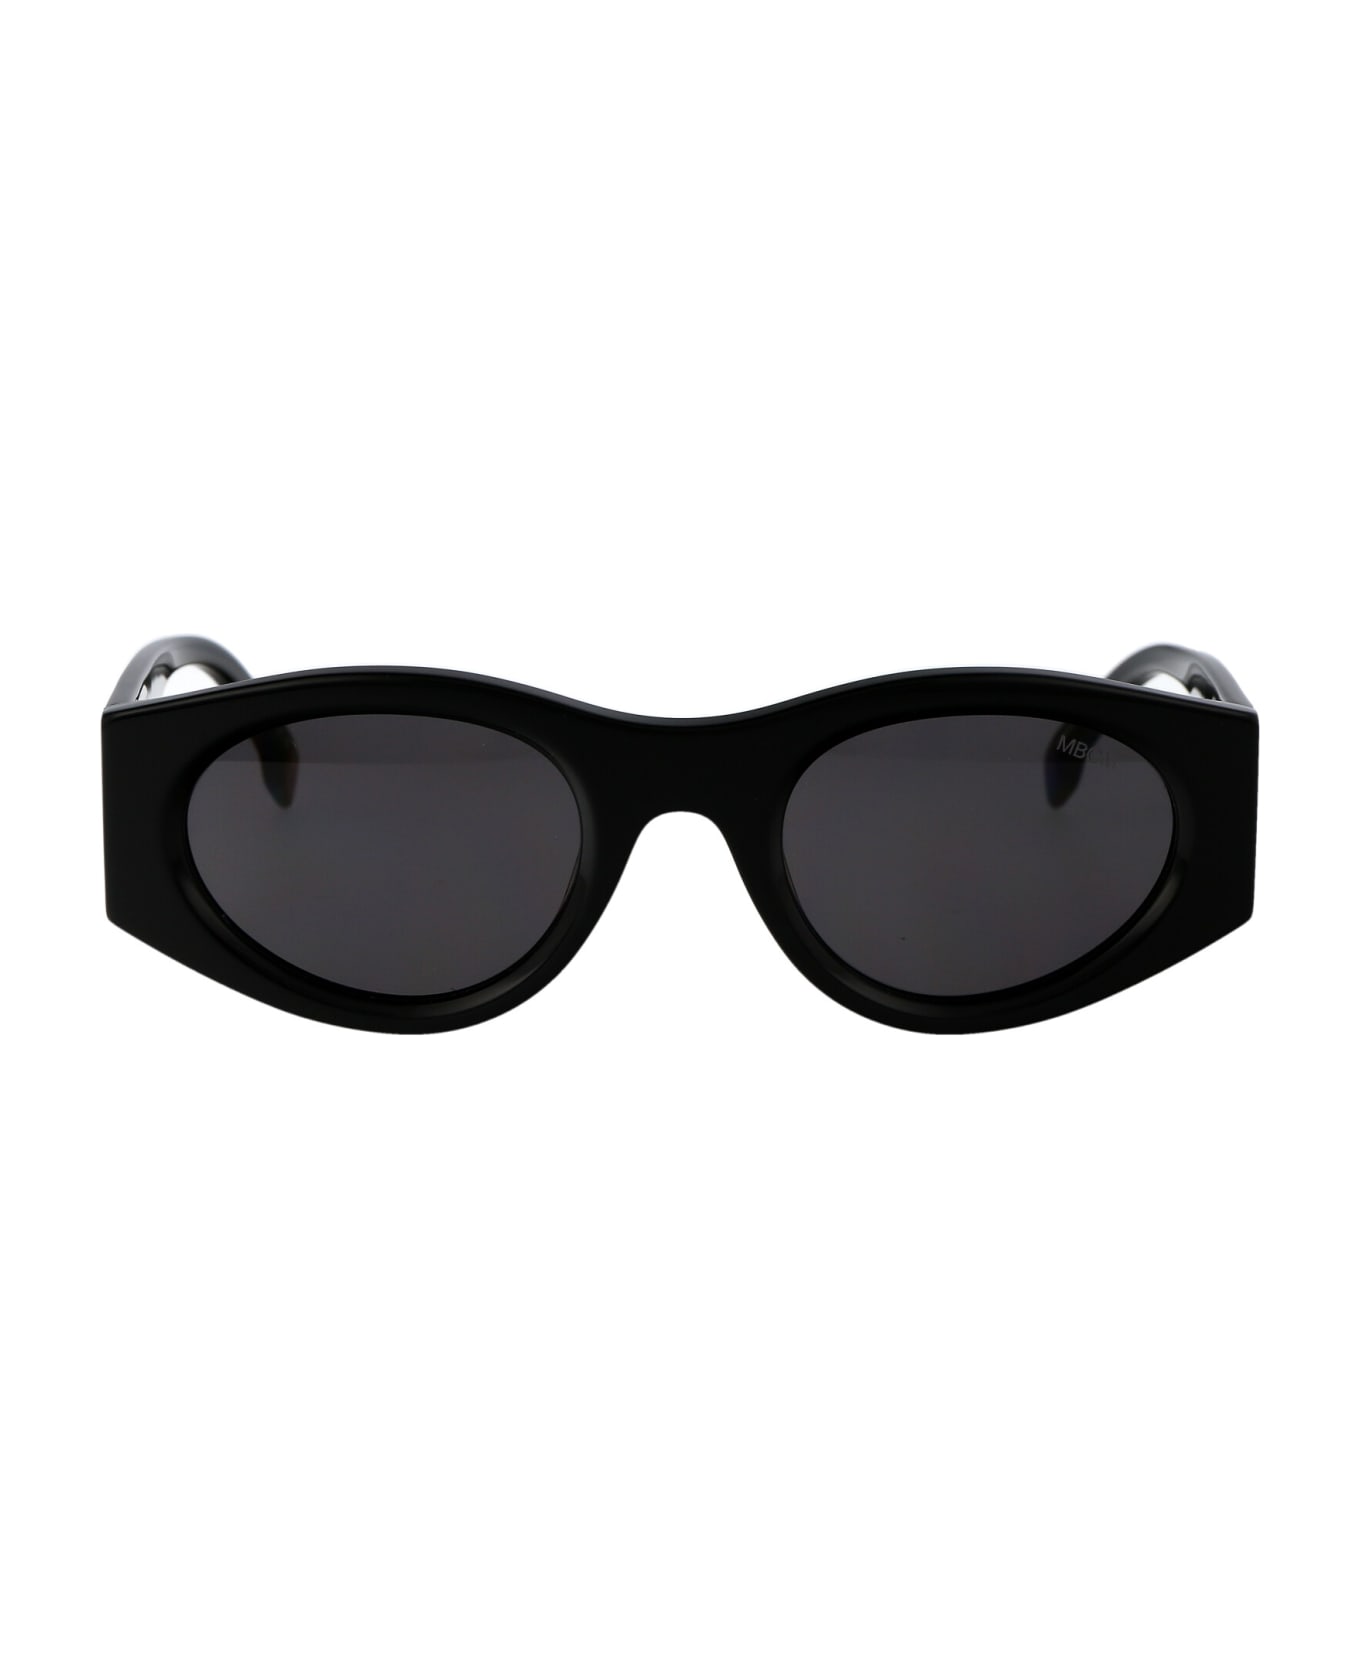 Marcelo Burlon Pasithea 021 Sunglasses - 1007 BLACK サングラス